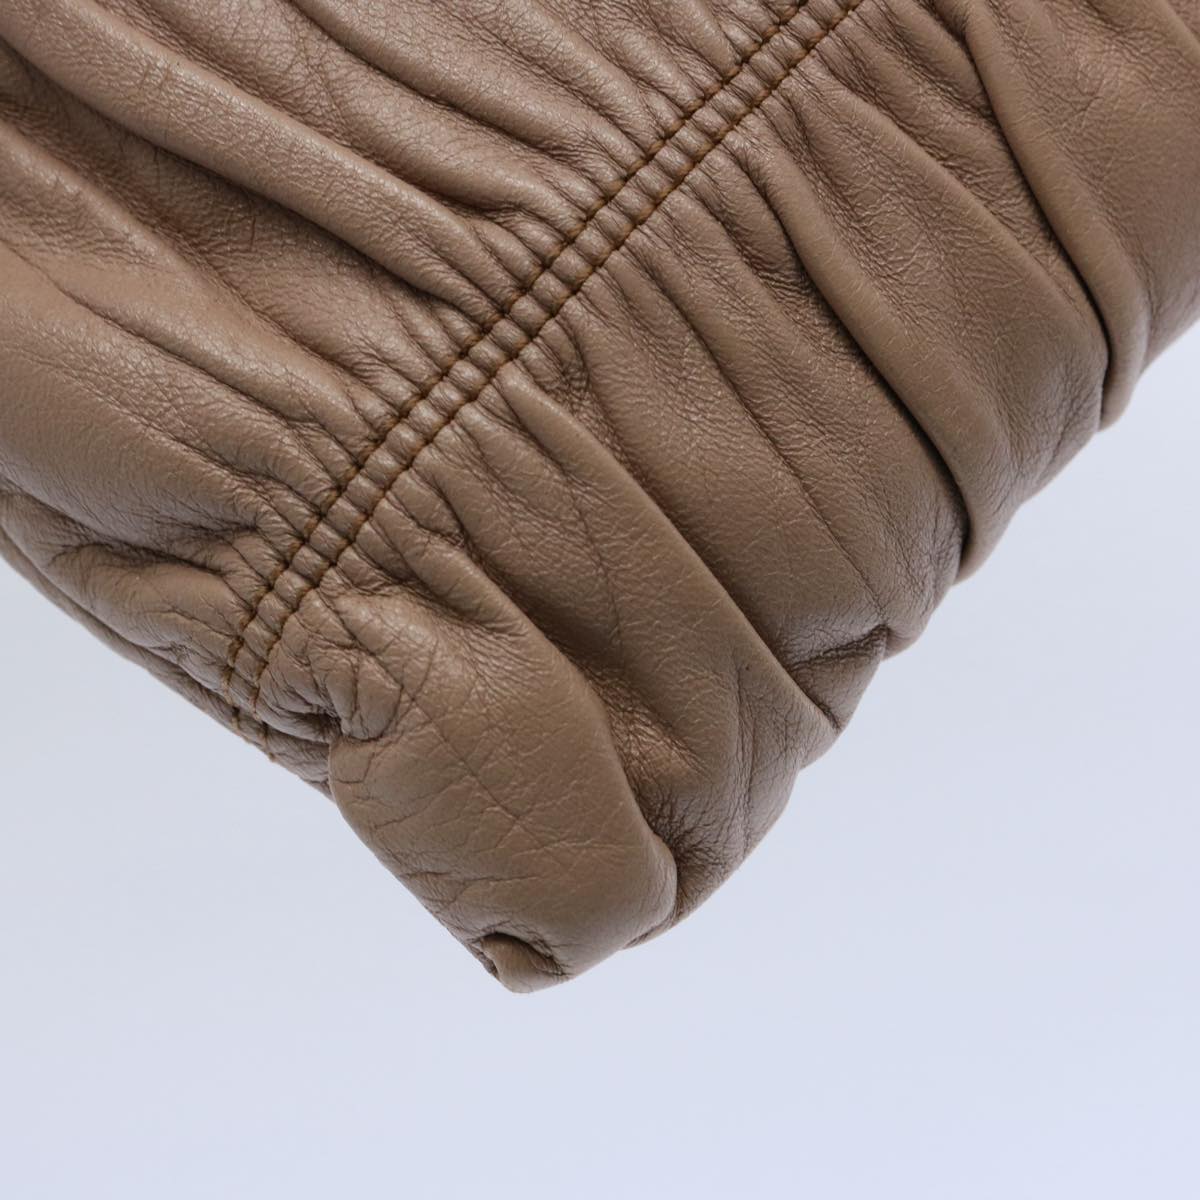 PRADA Clutch Bag Leather Beige Auth bs10581